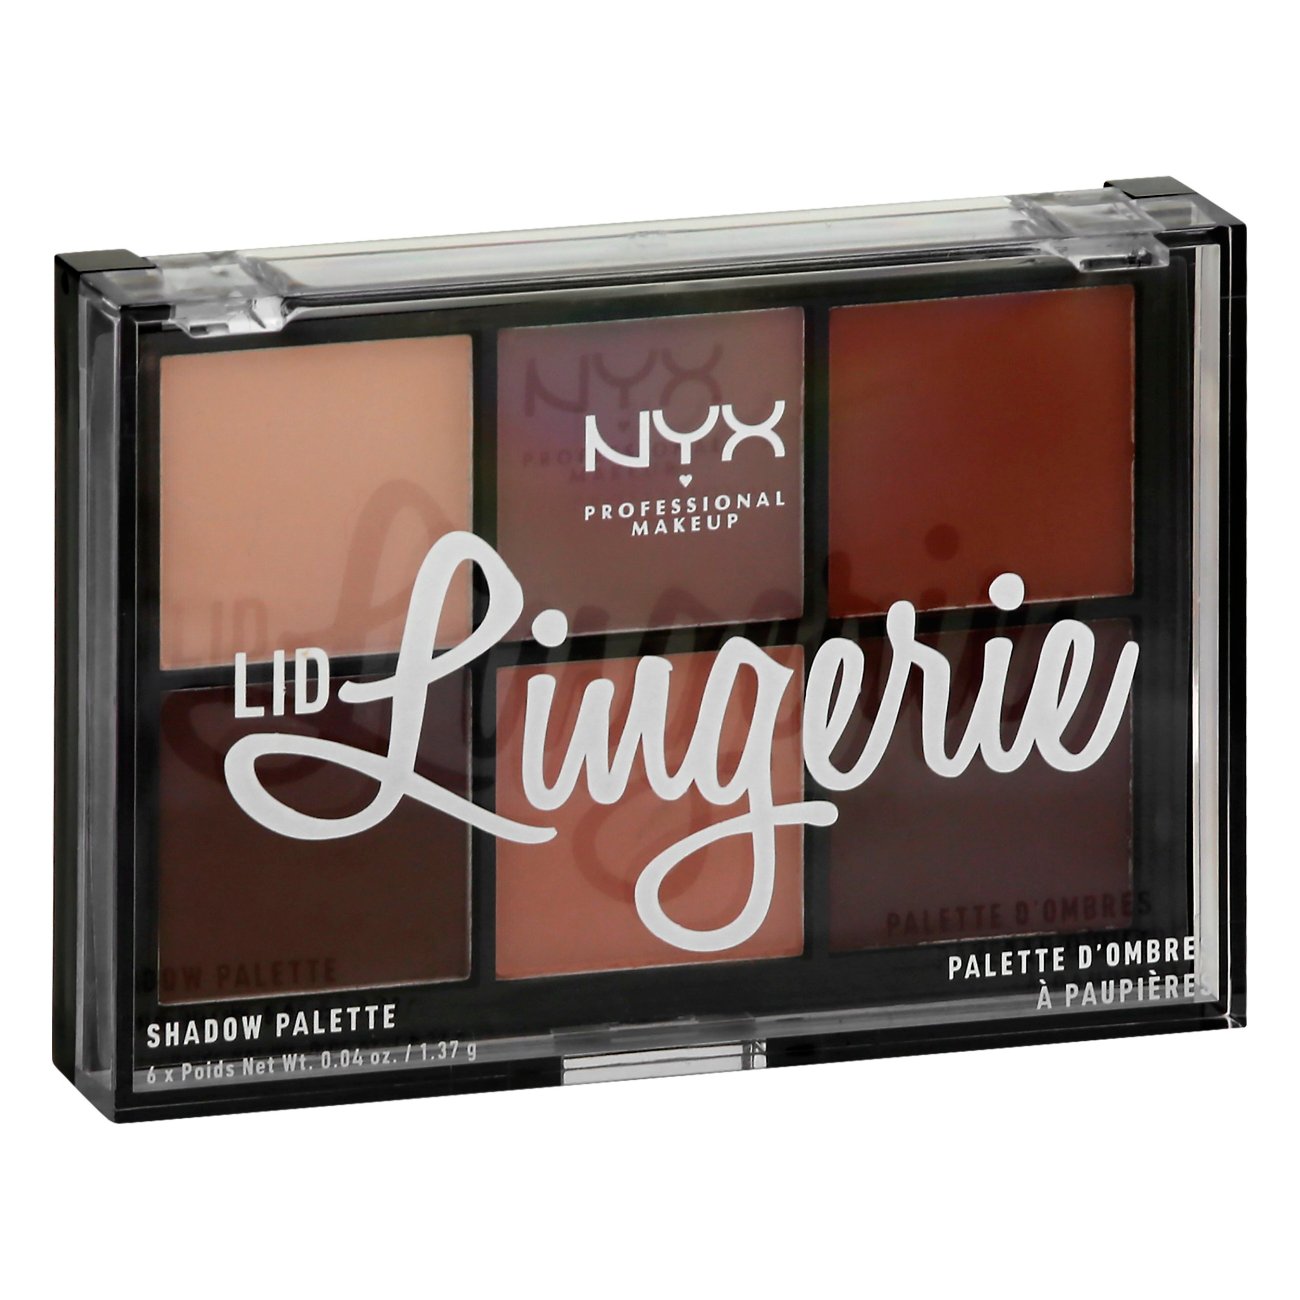 Nyx Lid Lingerie Shadow Palette